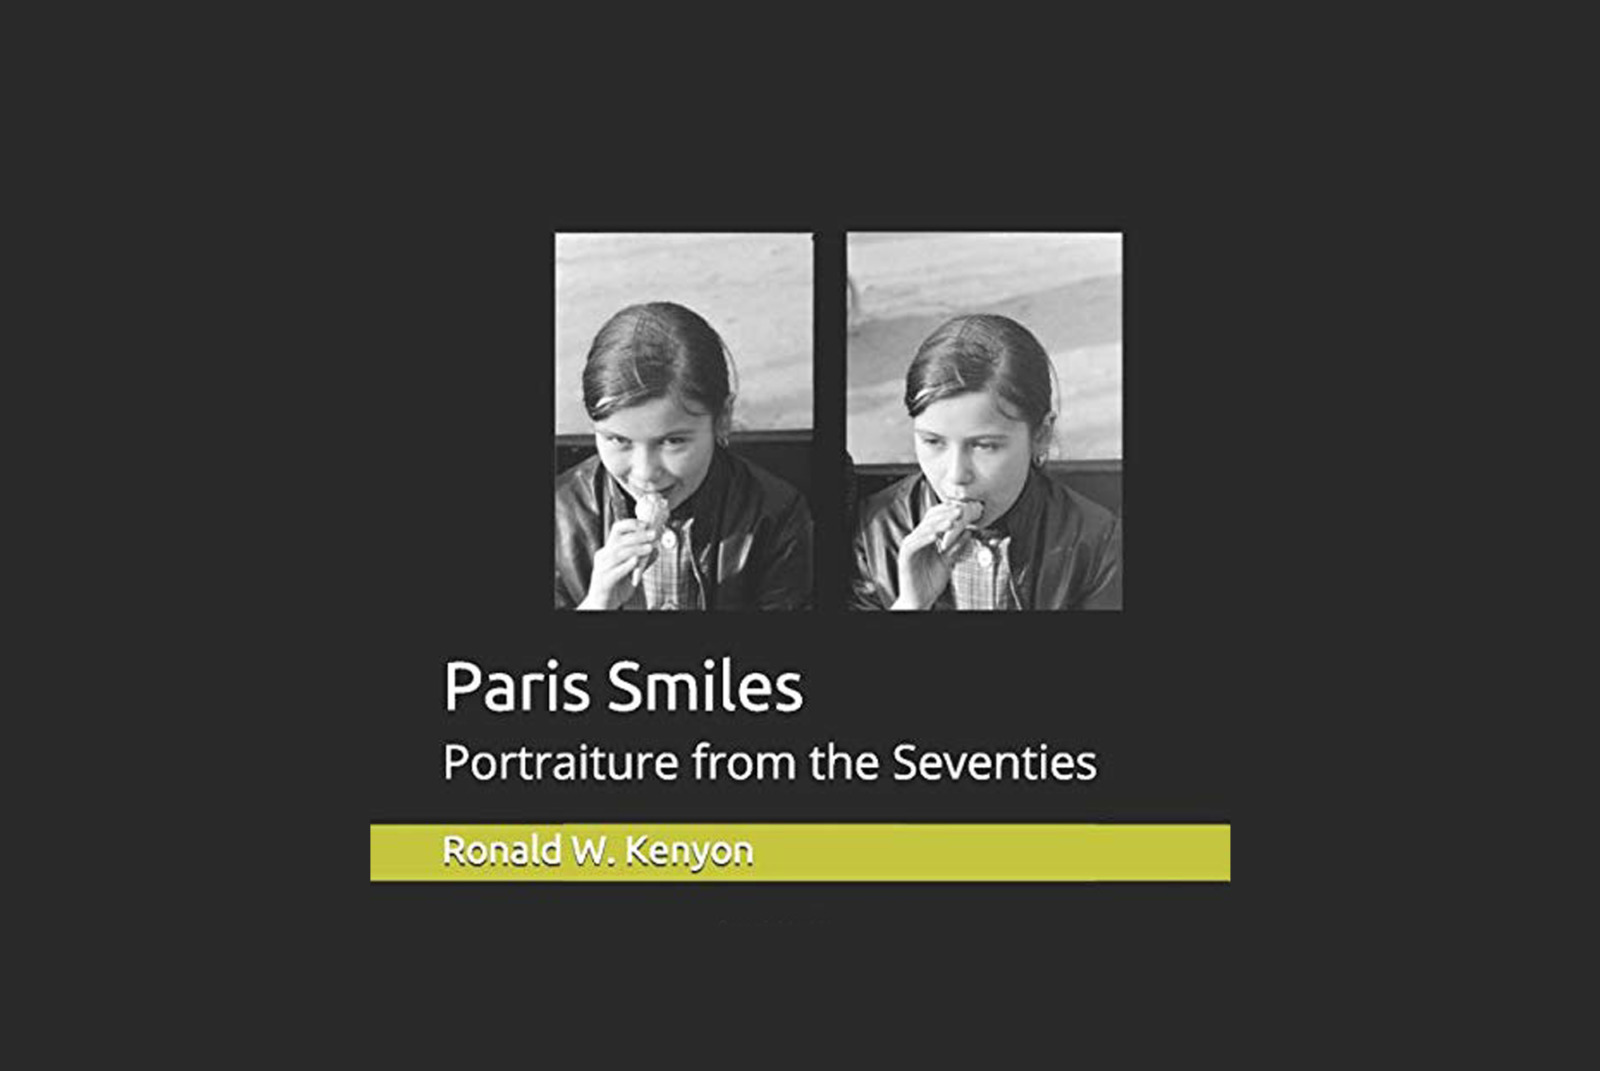 Paris smiles by Ronald Kenyon